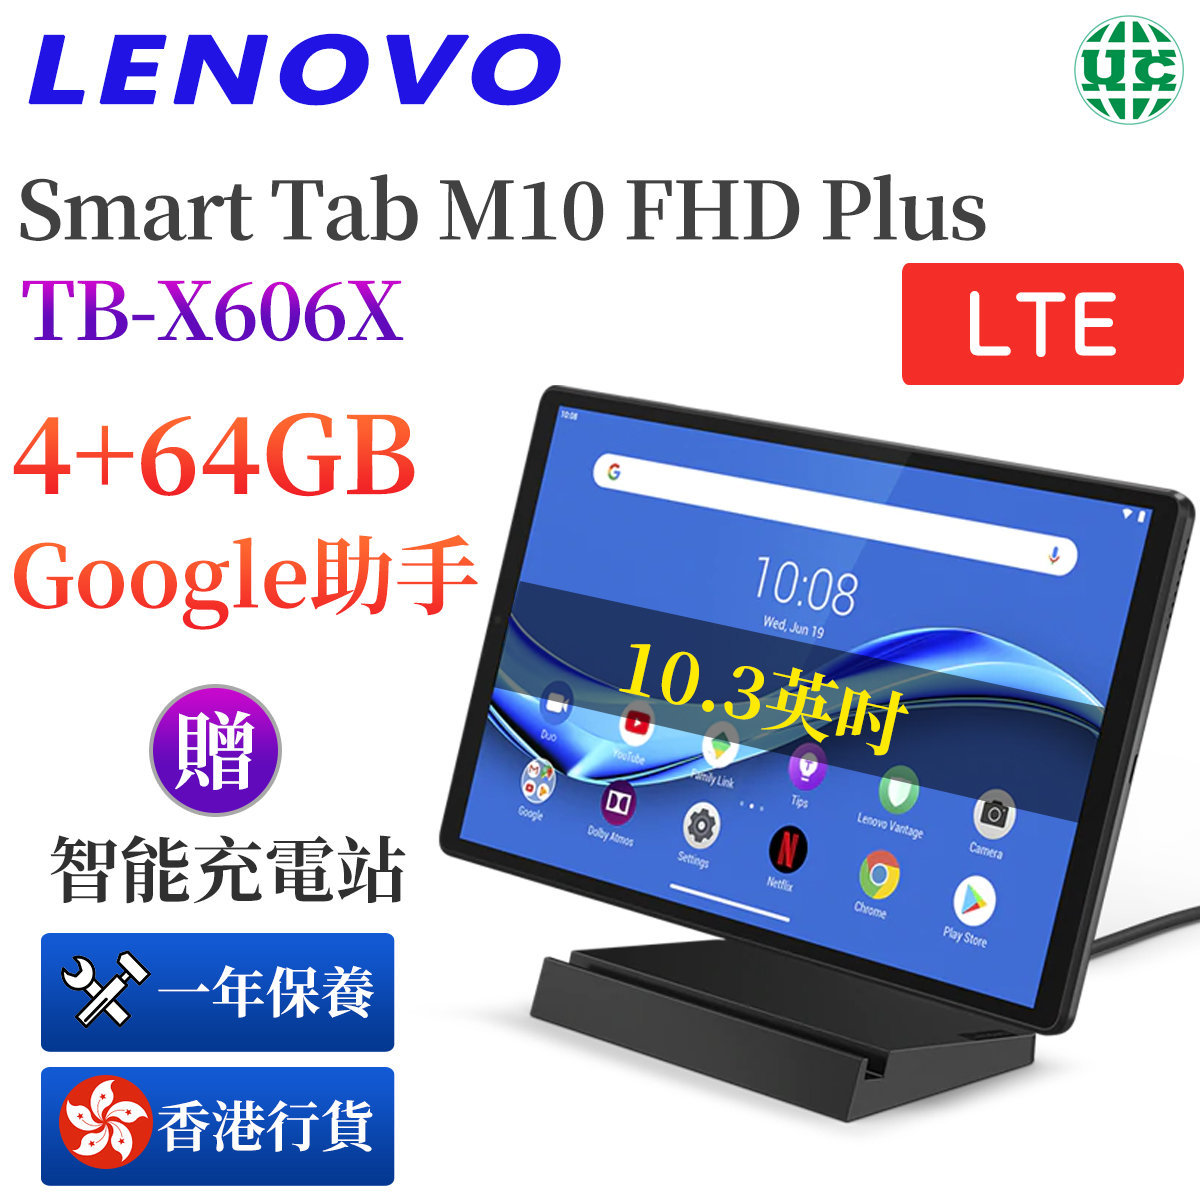 聯想| 【第二代】Smart Tab M10 FHD Plus 10.3”英吋4GB + 64GB TB